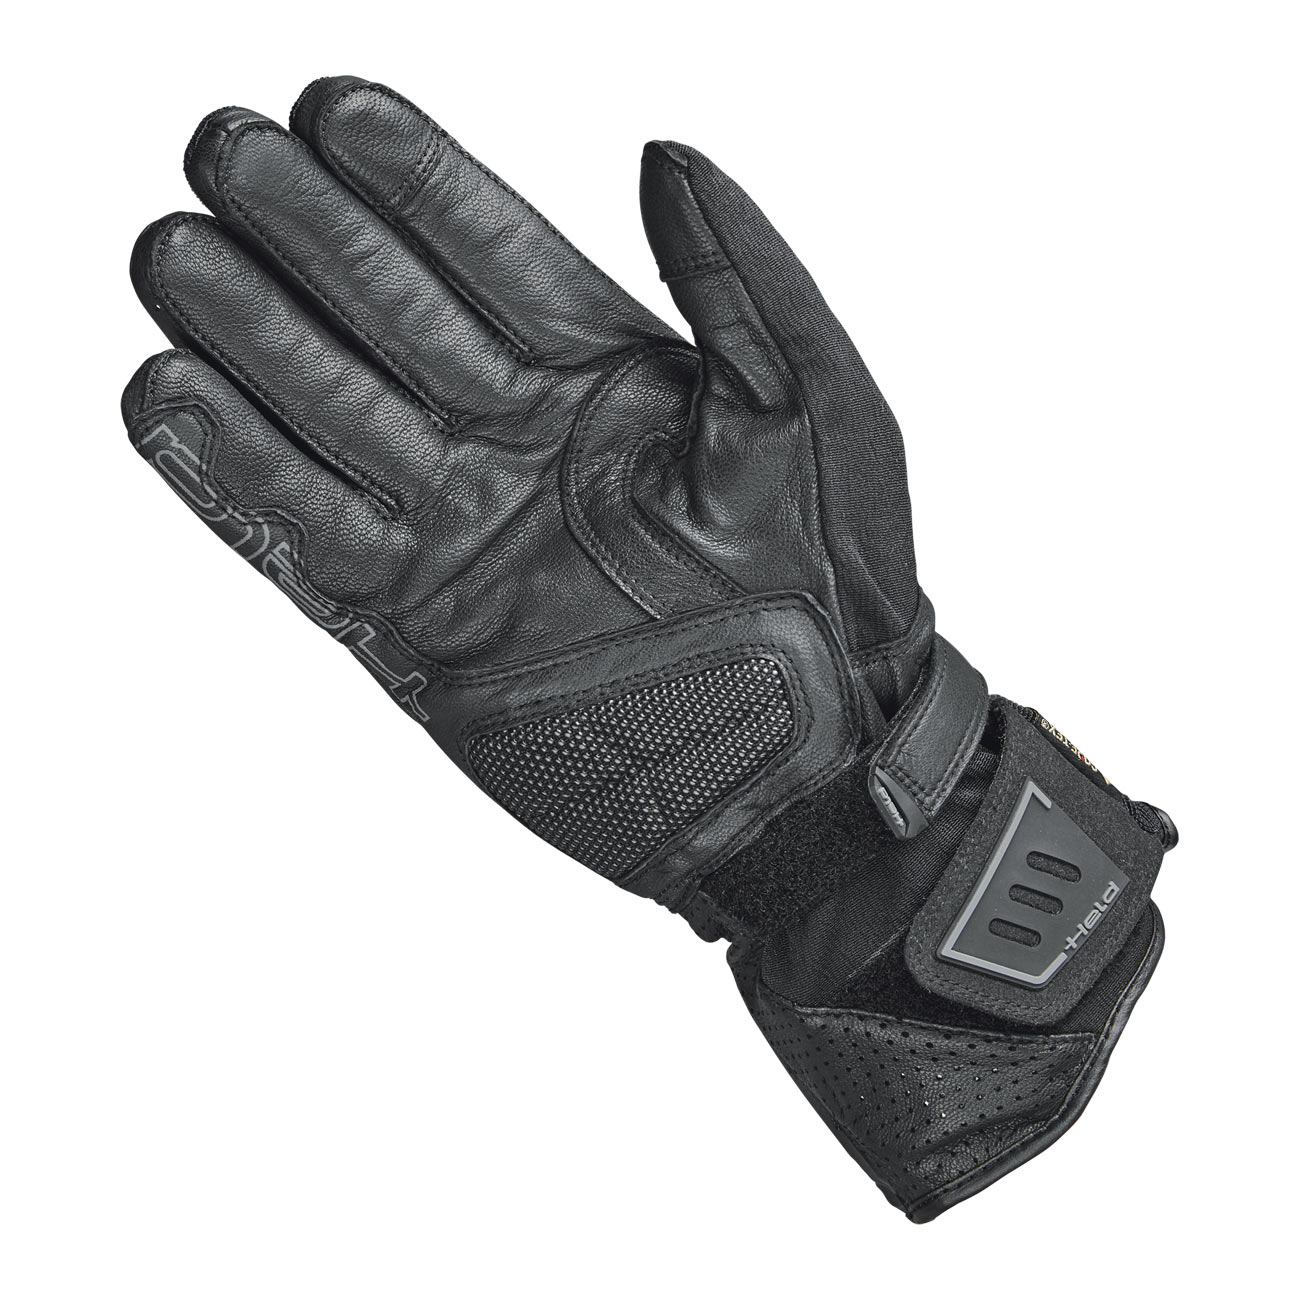 Score 4.0 GORE-TEX® glove + Gore Grip technology